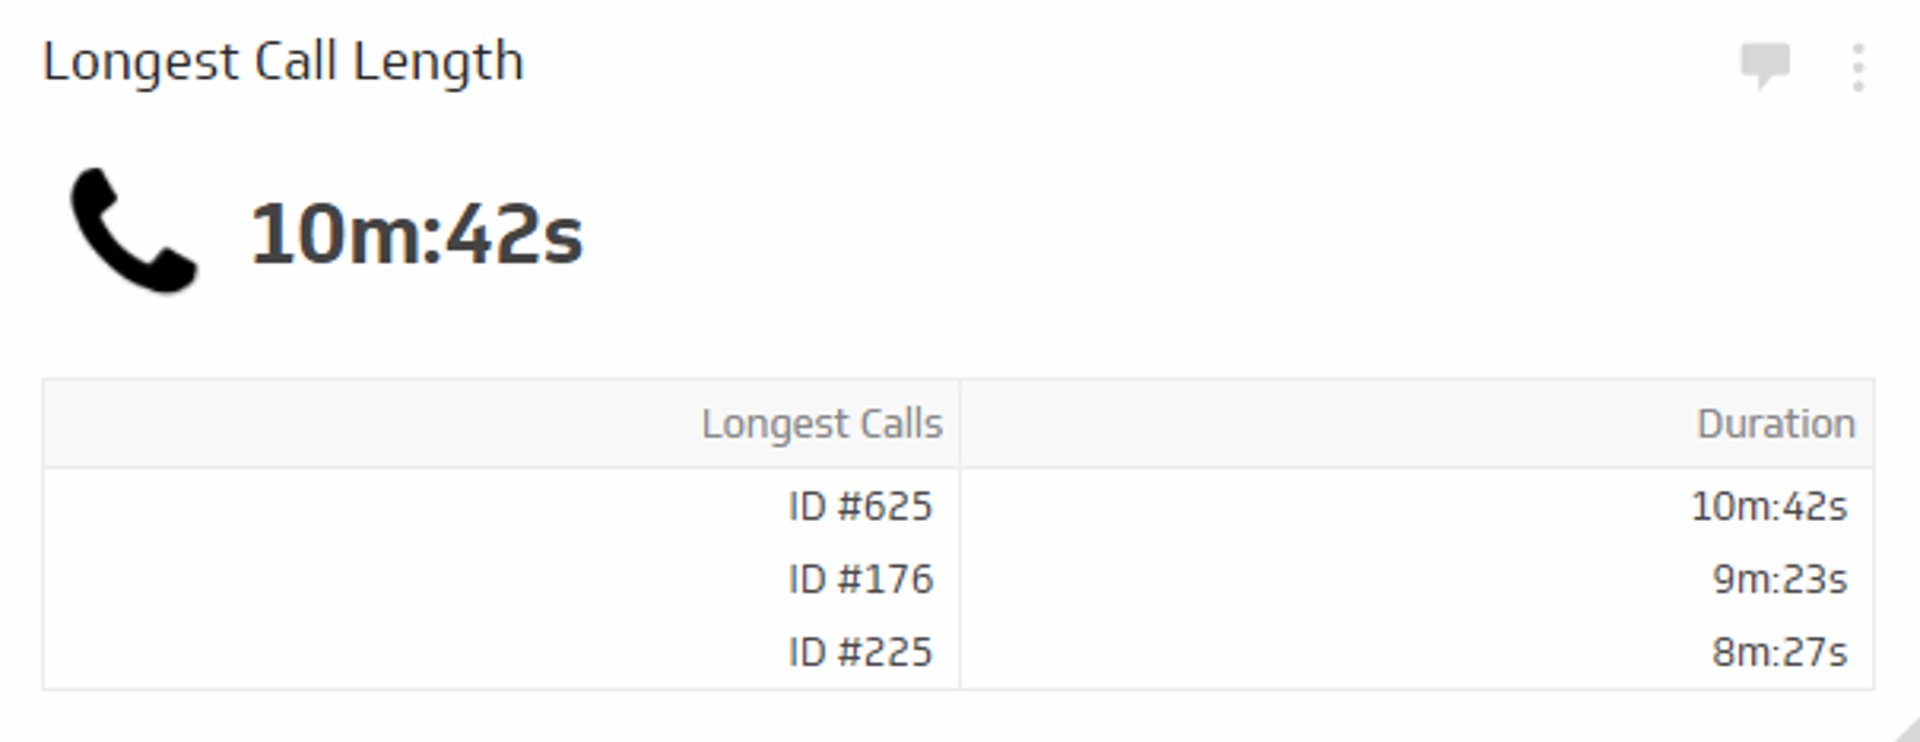 Call Center KPI Example - Longest Call Length Metric